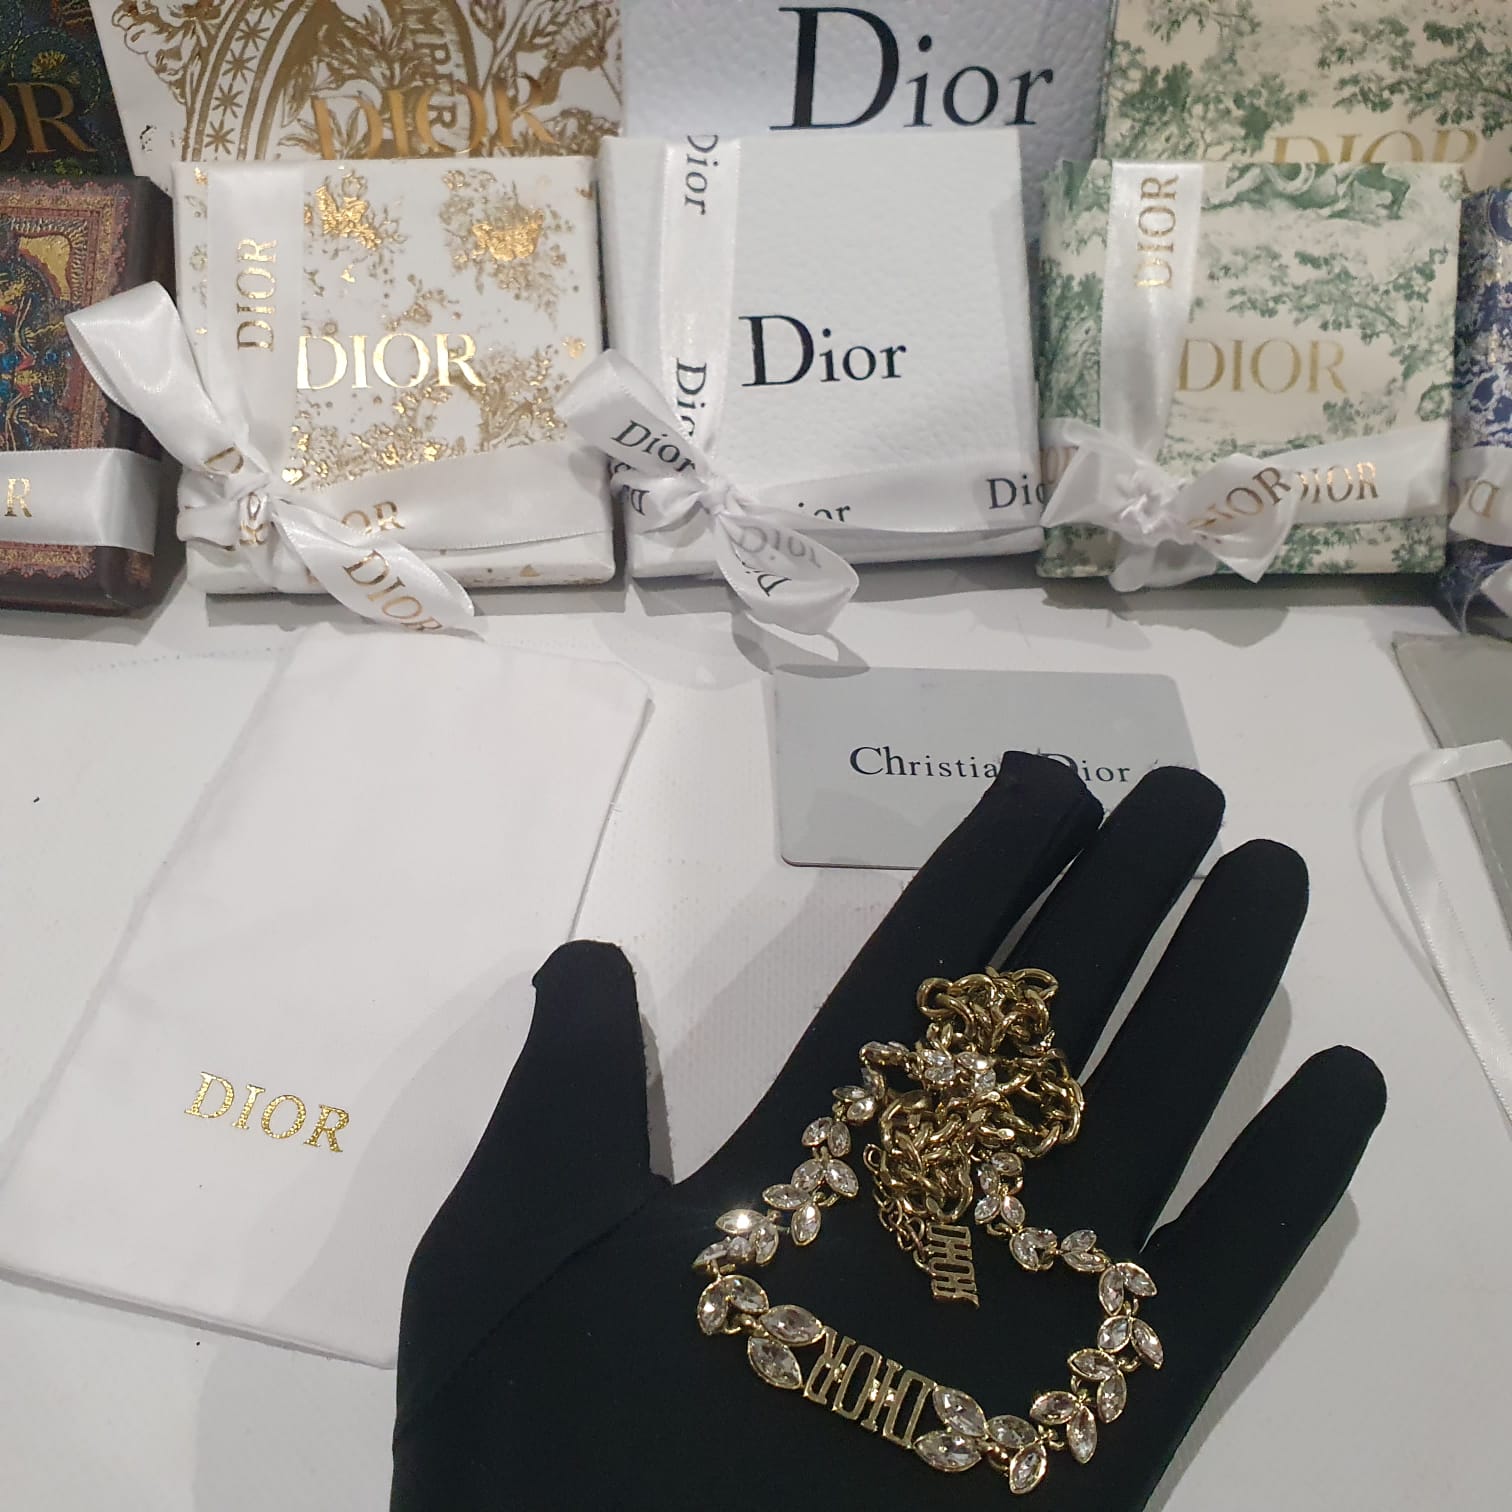 Christian Dior Necklace and Bracelet